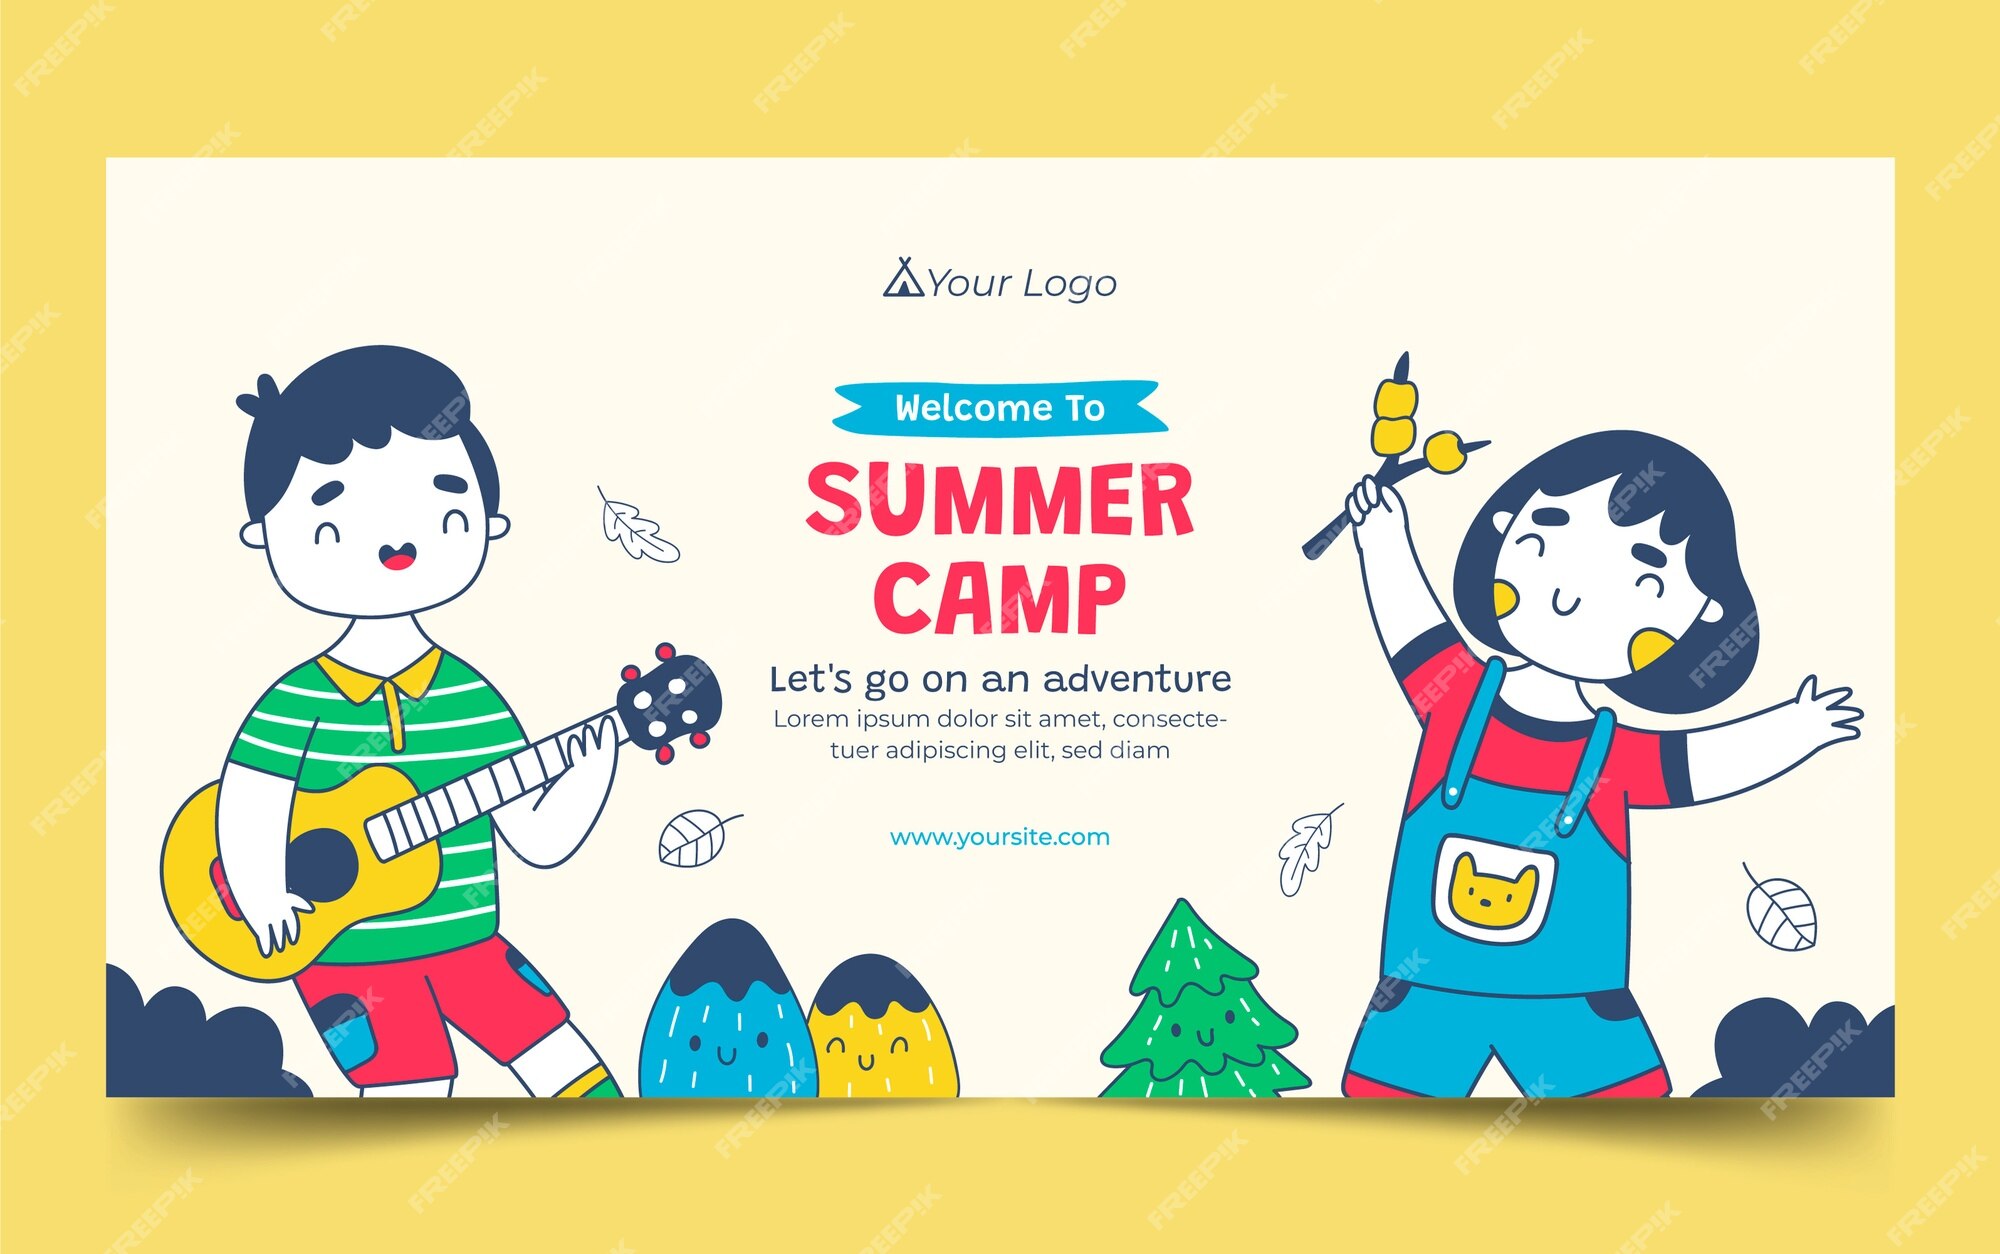 Summer camp Vectors & Illustrations for Free Download | Freepik